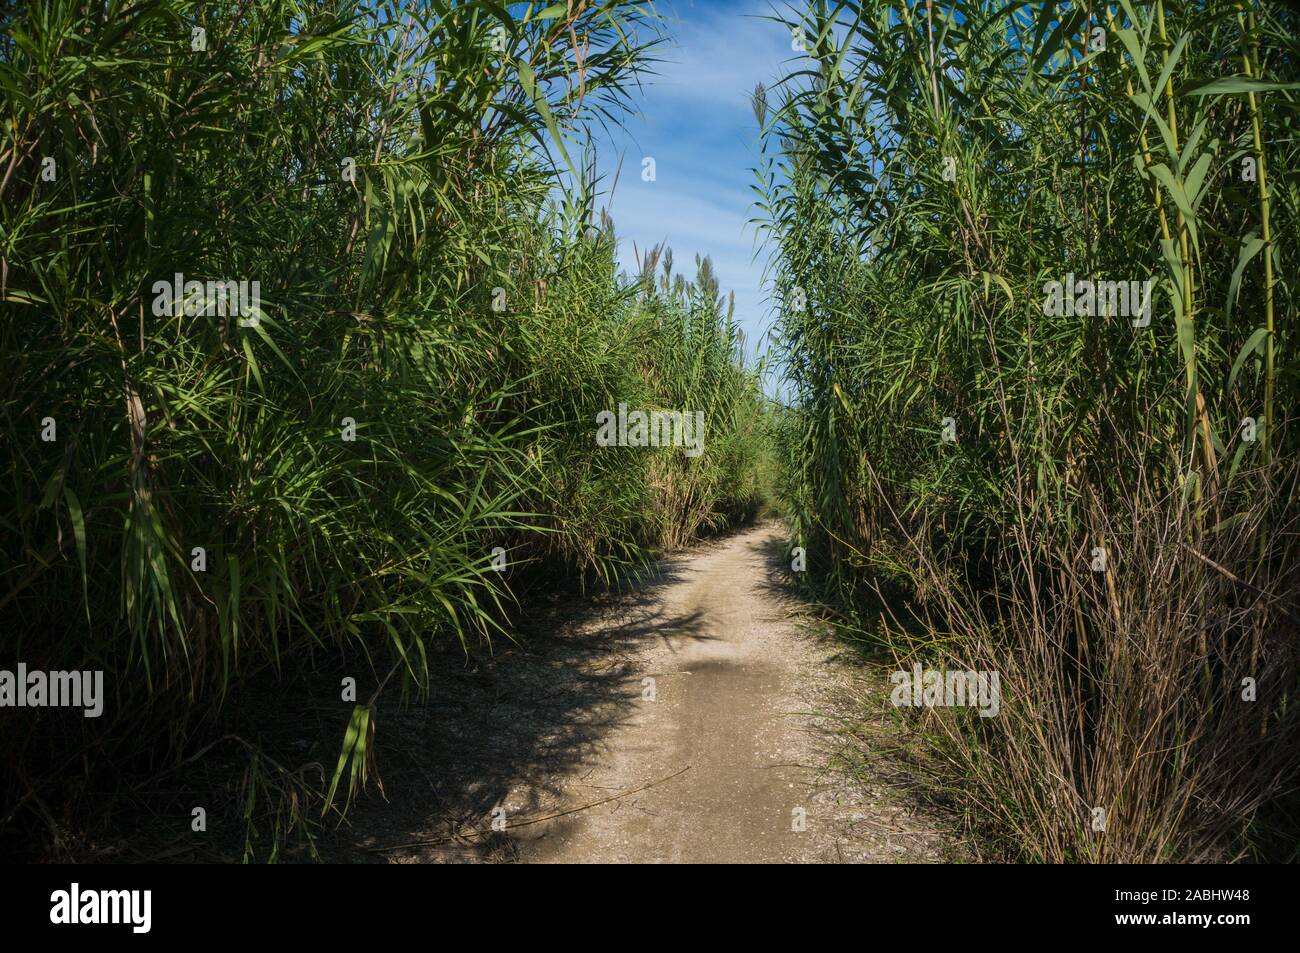 Path between vegetation under blue sky Stock Photo